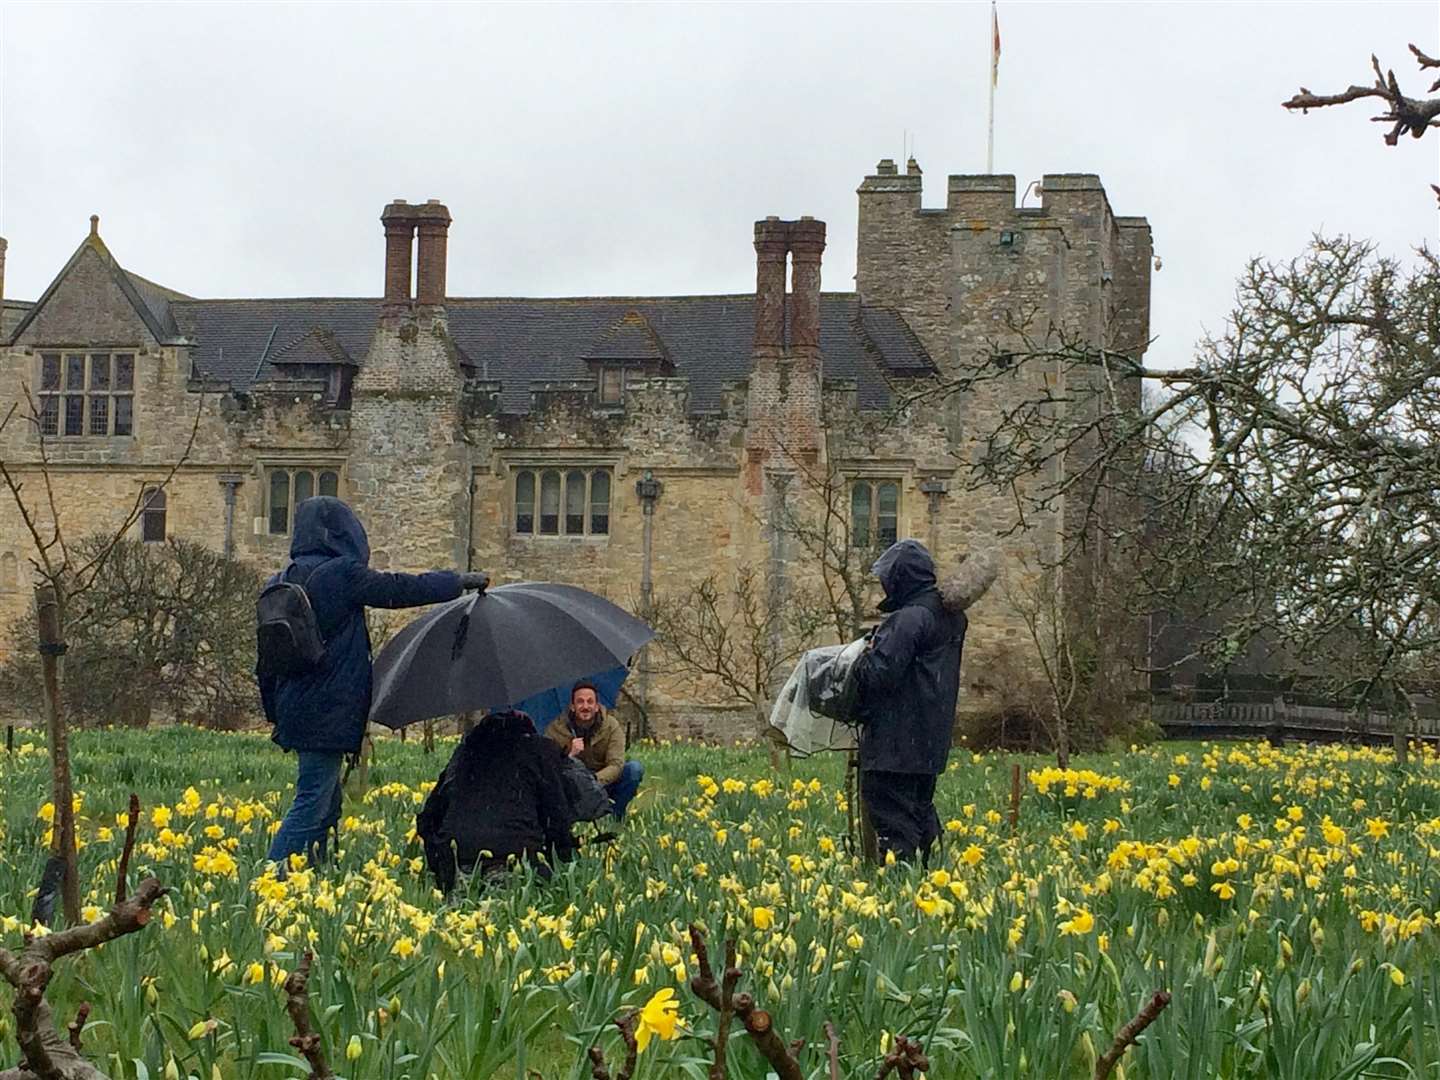 Gardeners' World filming in Anne Boleyn's Orchard at Hever Castle